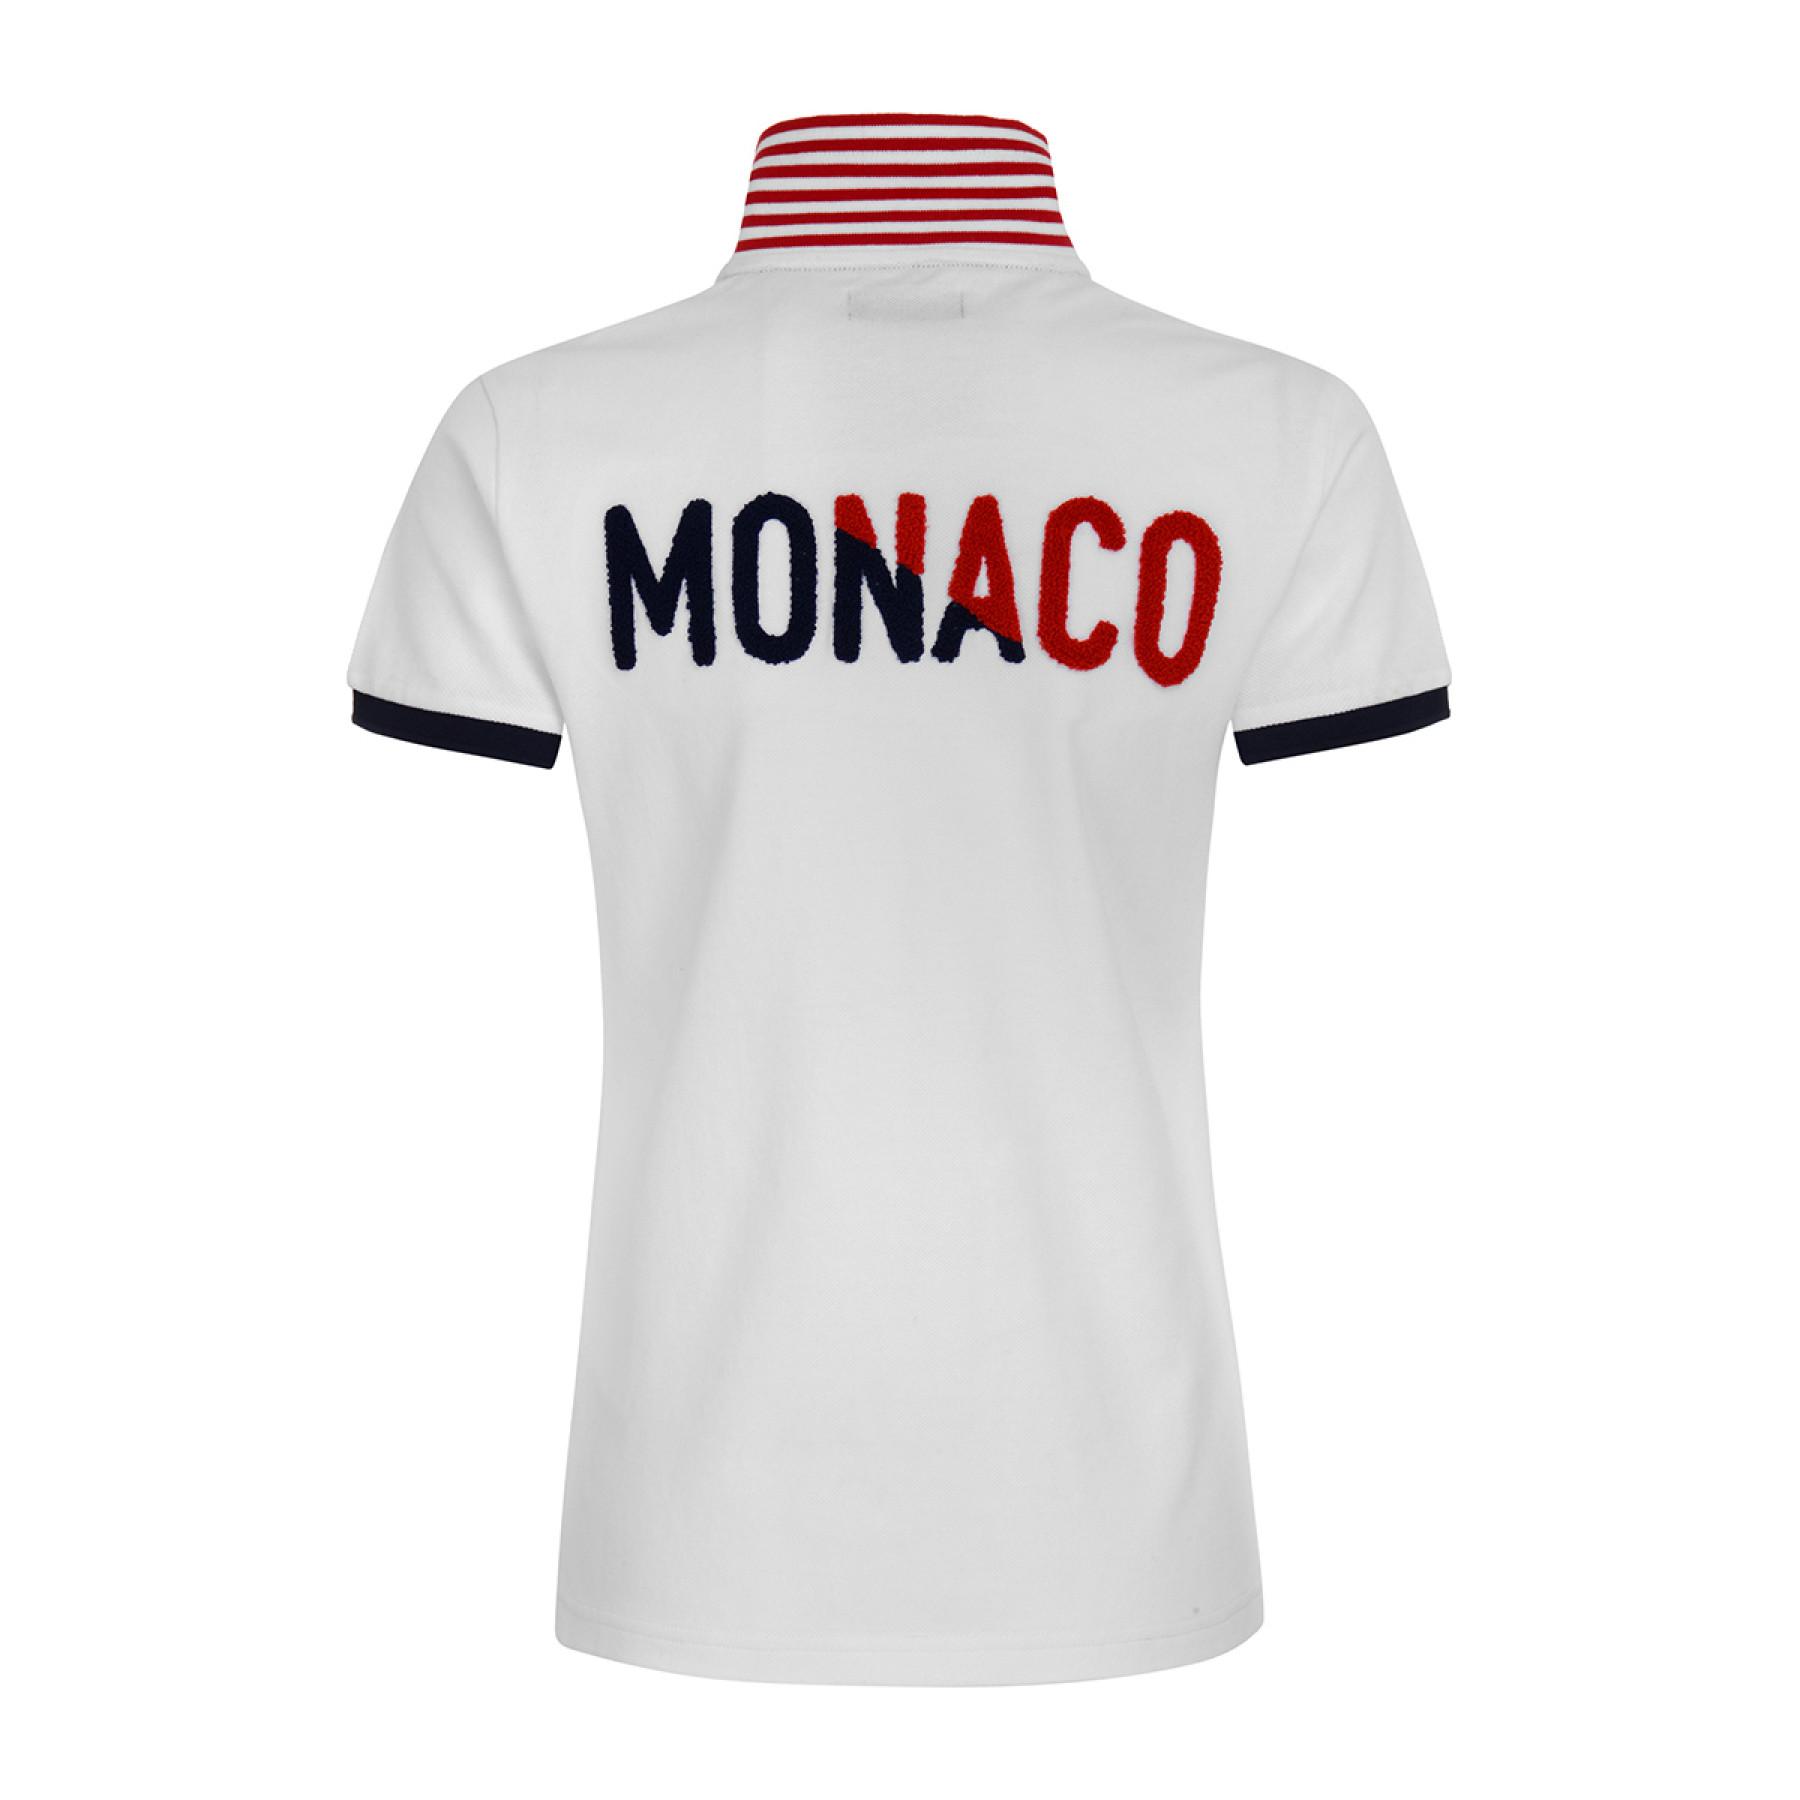 Polotröja för kvinnor AS Monaco 2020/21 blanche